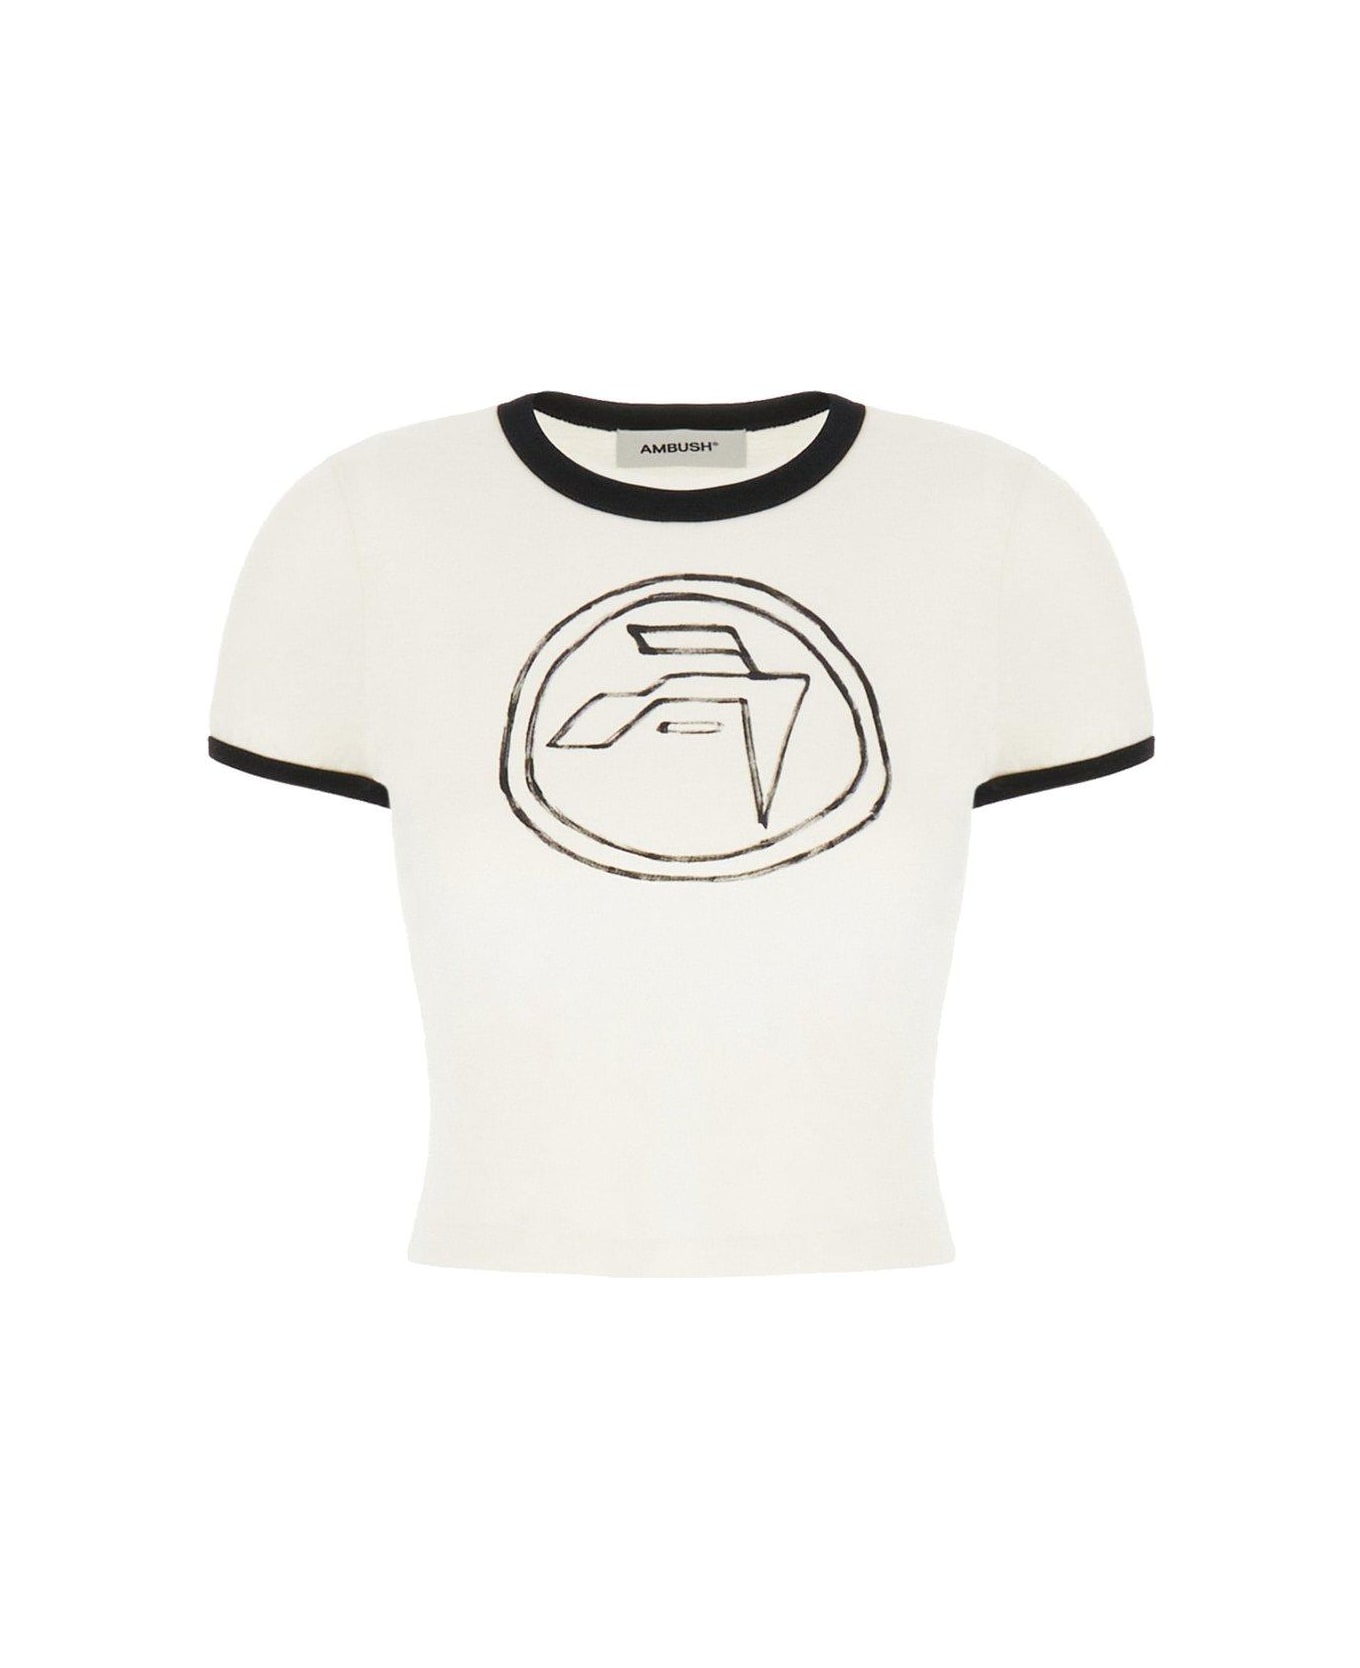 AMBUSH Hand Drawn Emblem Baby T-shirt - TOFU TAP SHOE Tシャツ